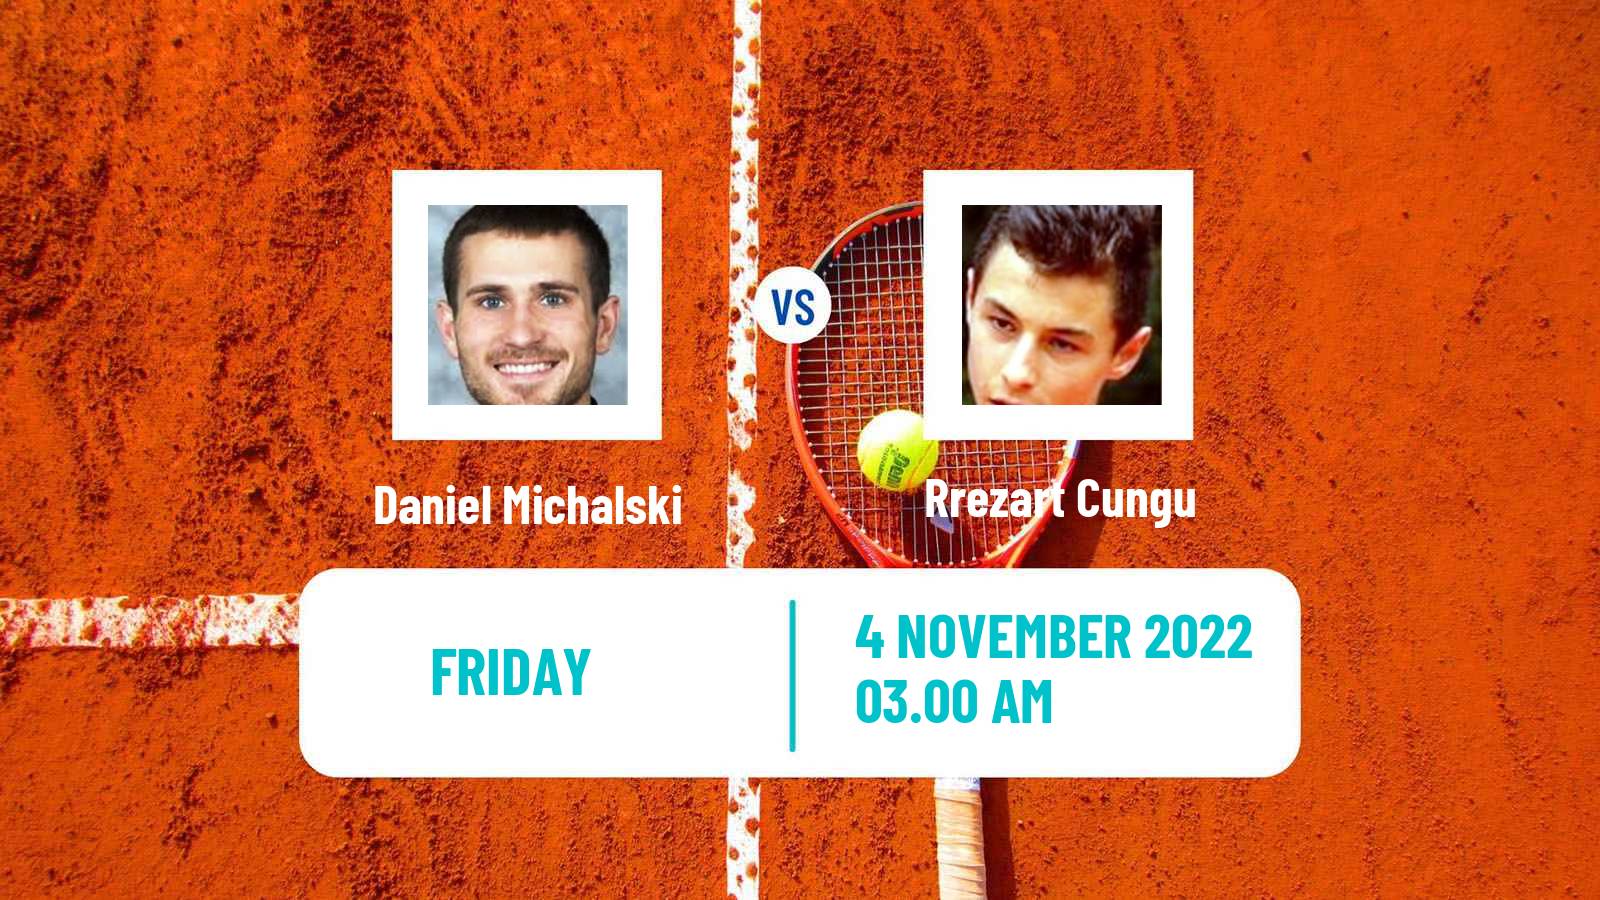 Tennis ITF Tournaments Daniel Michalski - Rrezart Cungu